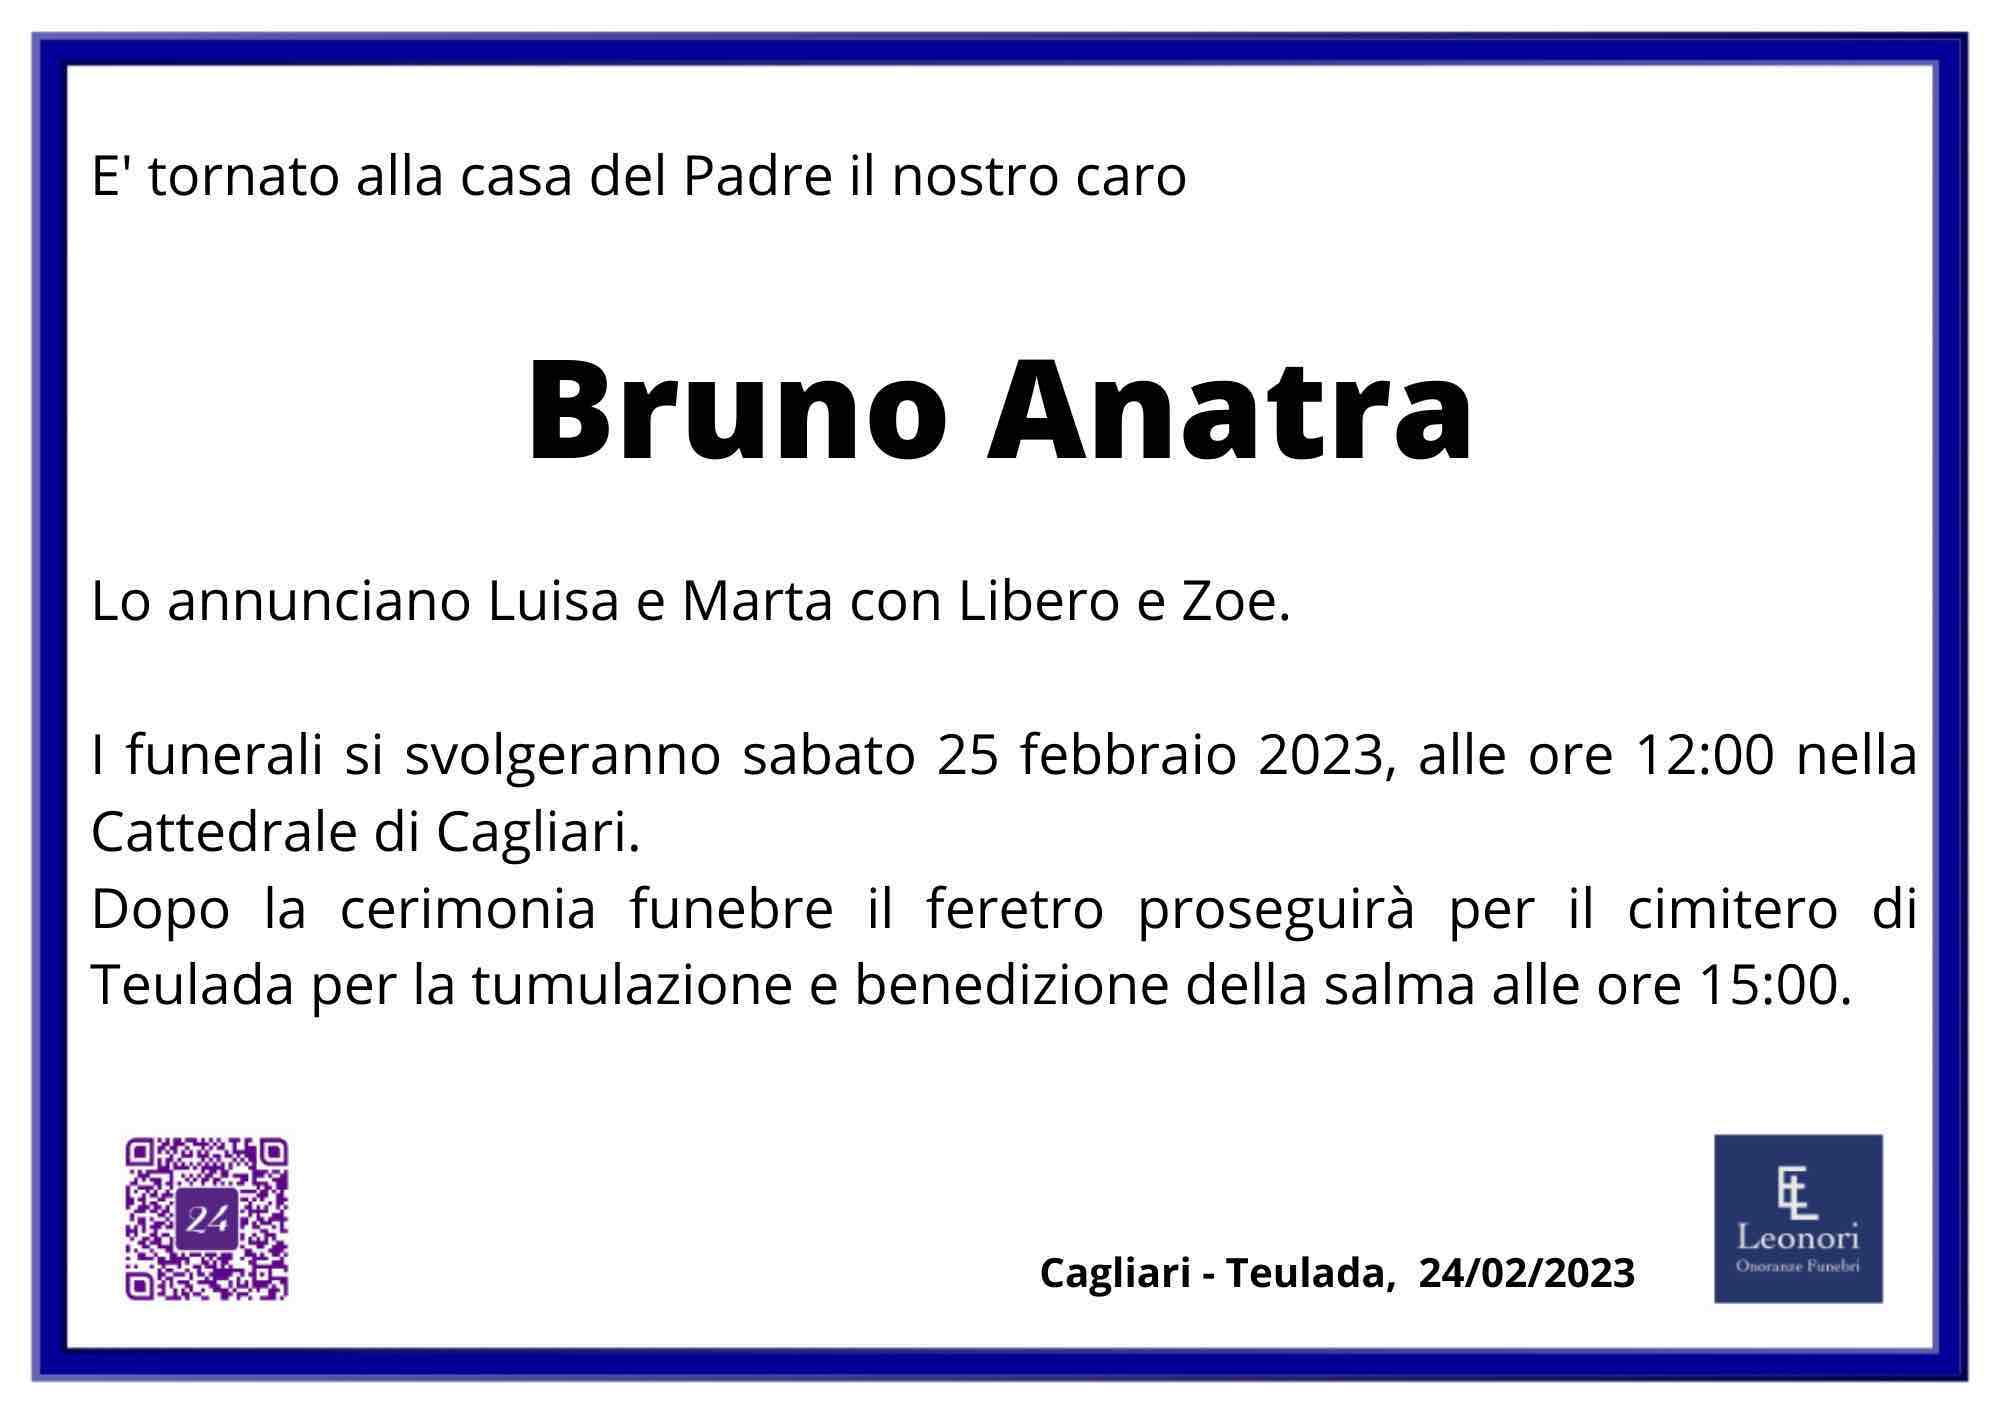 Bruno Anatra